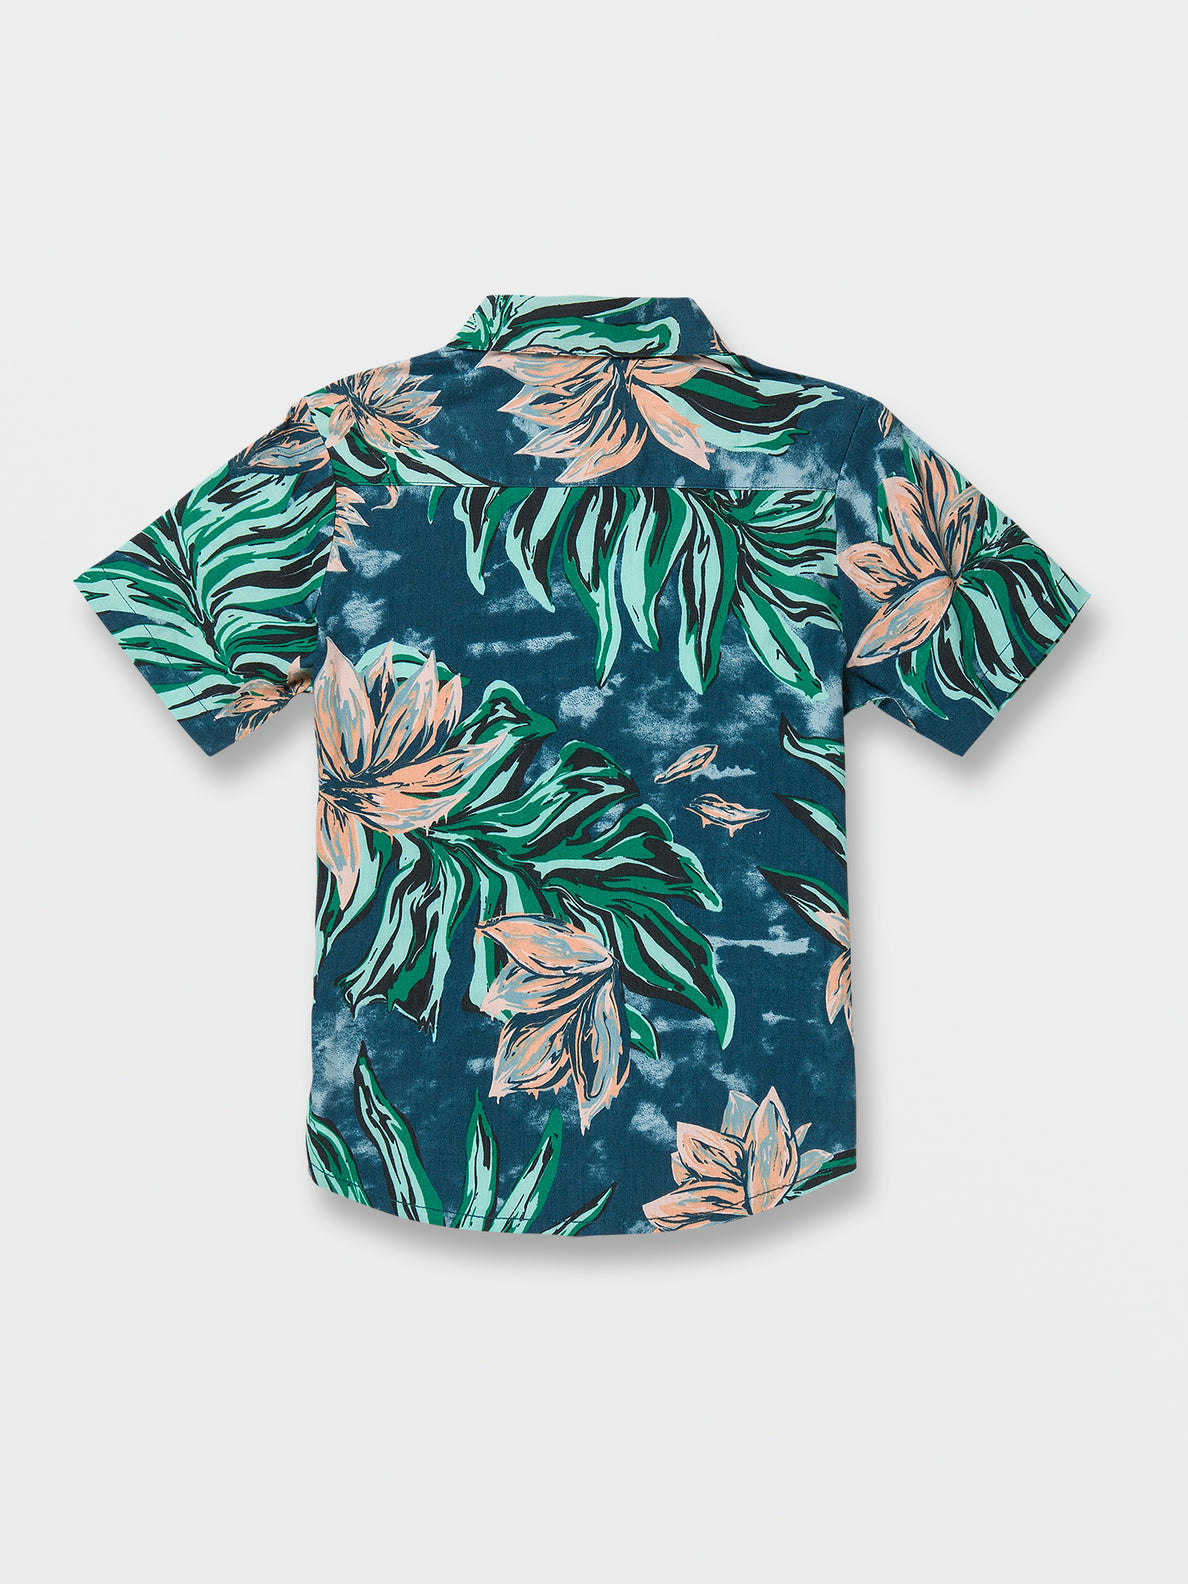 Little Boys Marble Floral Short Sleeve Shirt - Aged Indigo (Y0412308_AIN) [B]